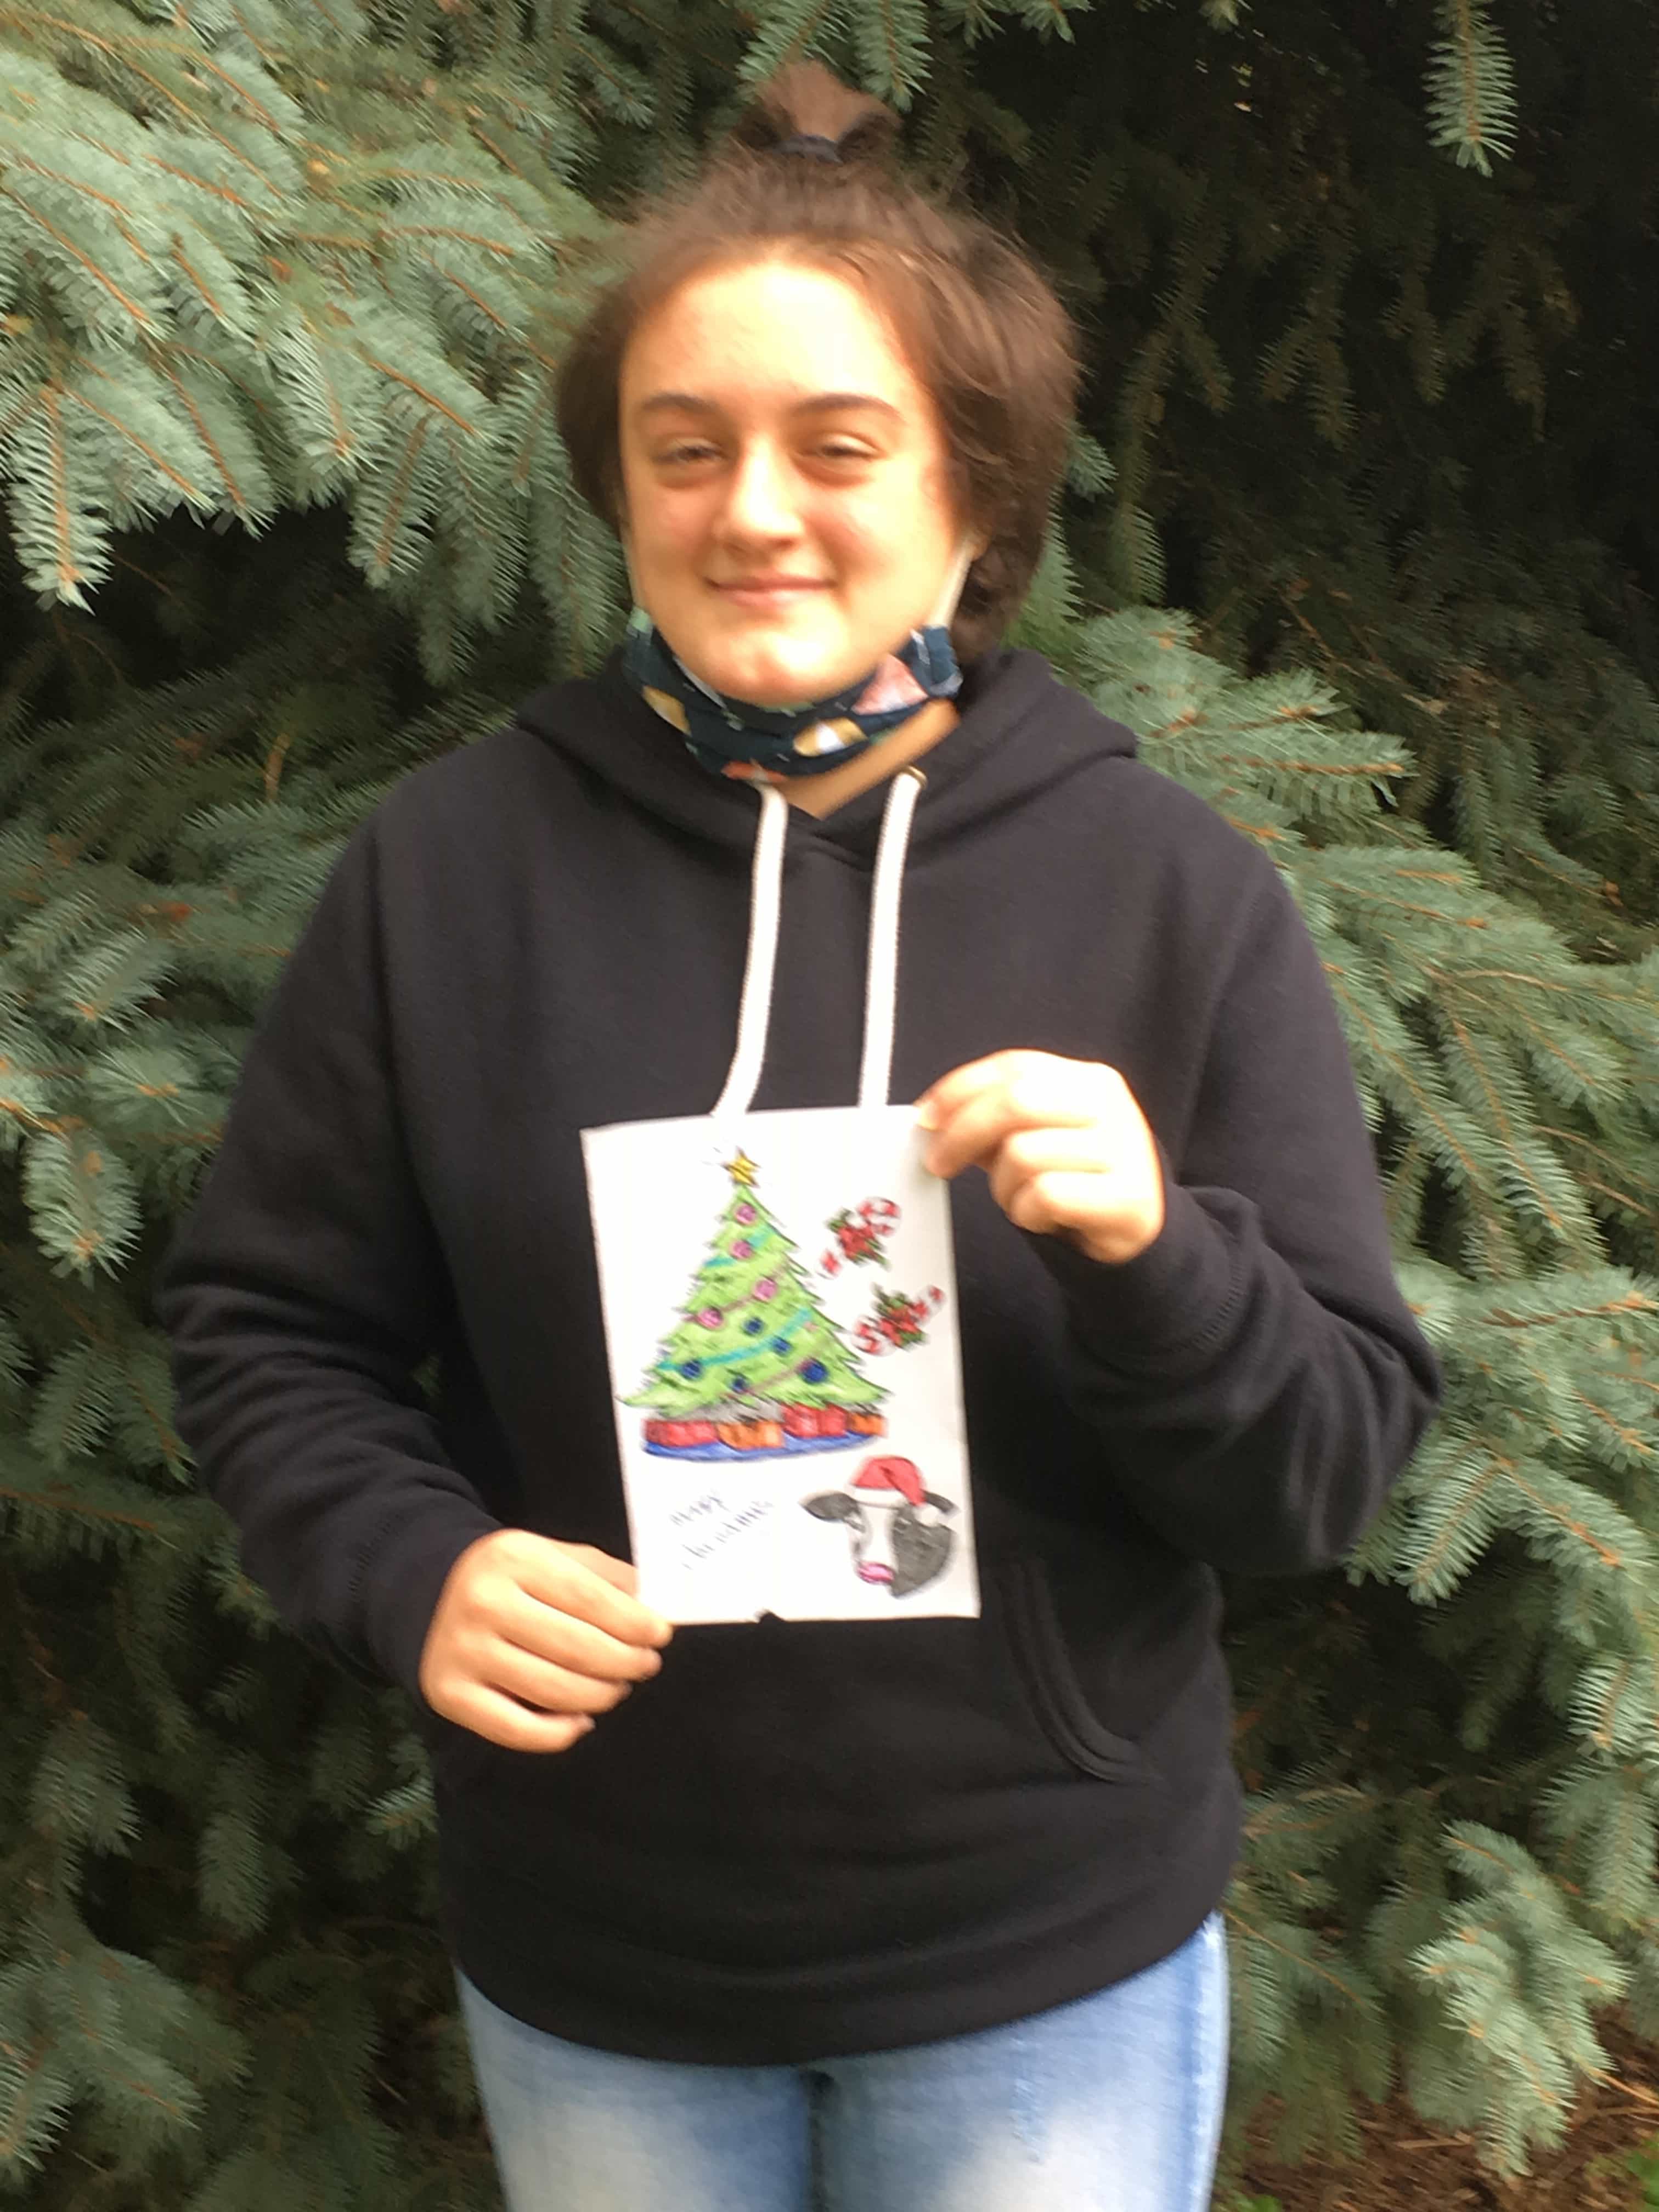 Harley and her Christmas card art